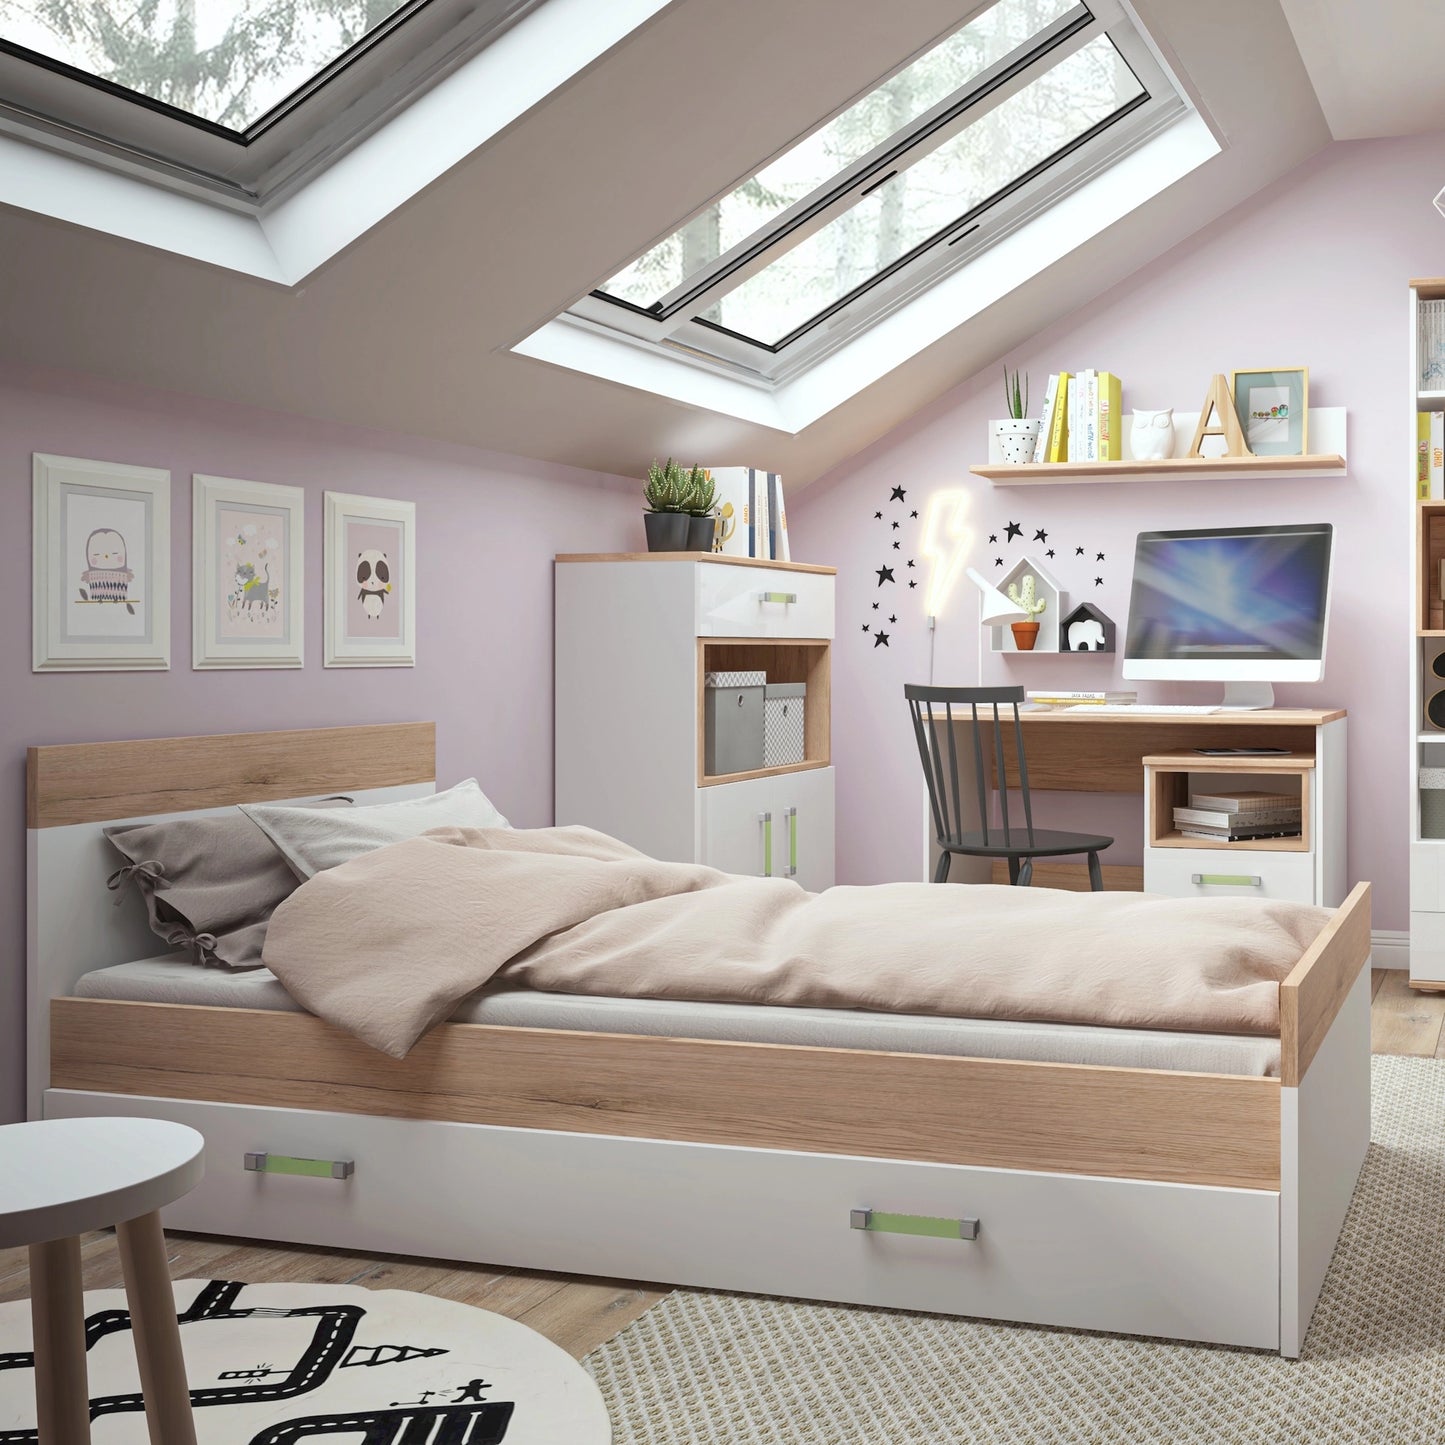 Furniture To Go 4Kids 3ft Single Bed with Under Drawer in Light Oak & White High Gloss (Lemon Handles)